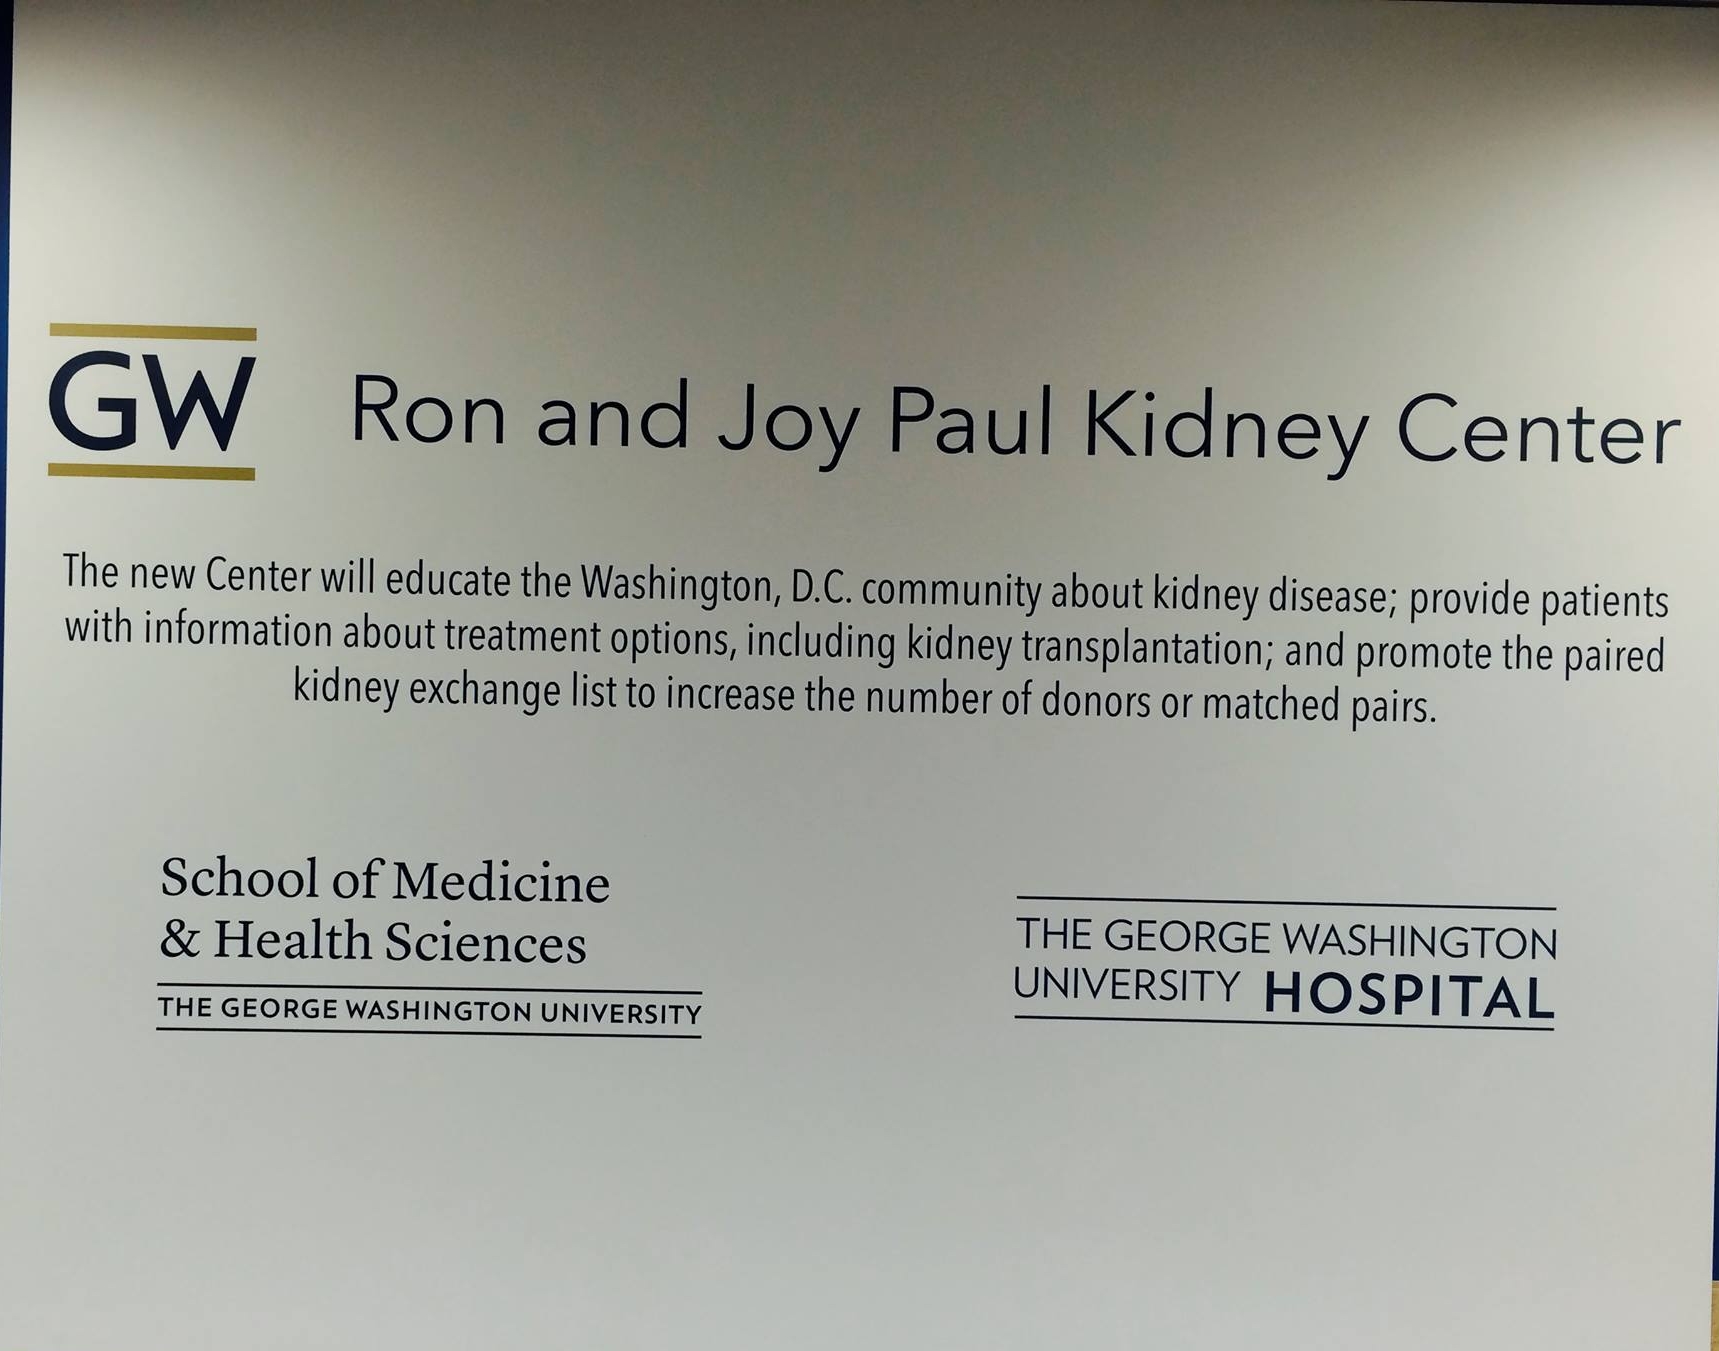 ron and joy paul kidney center.jpeg